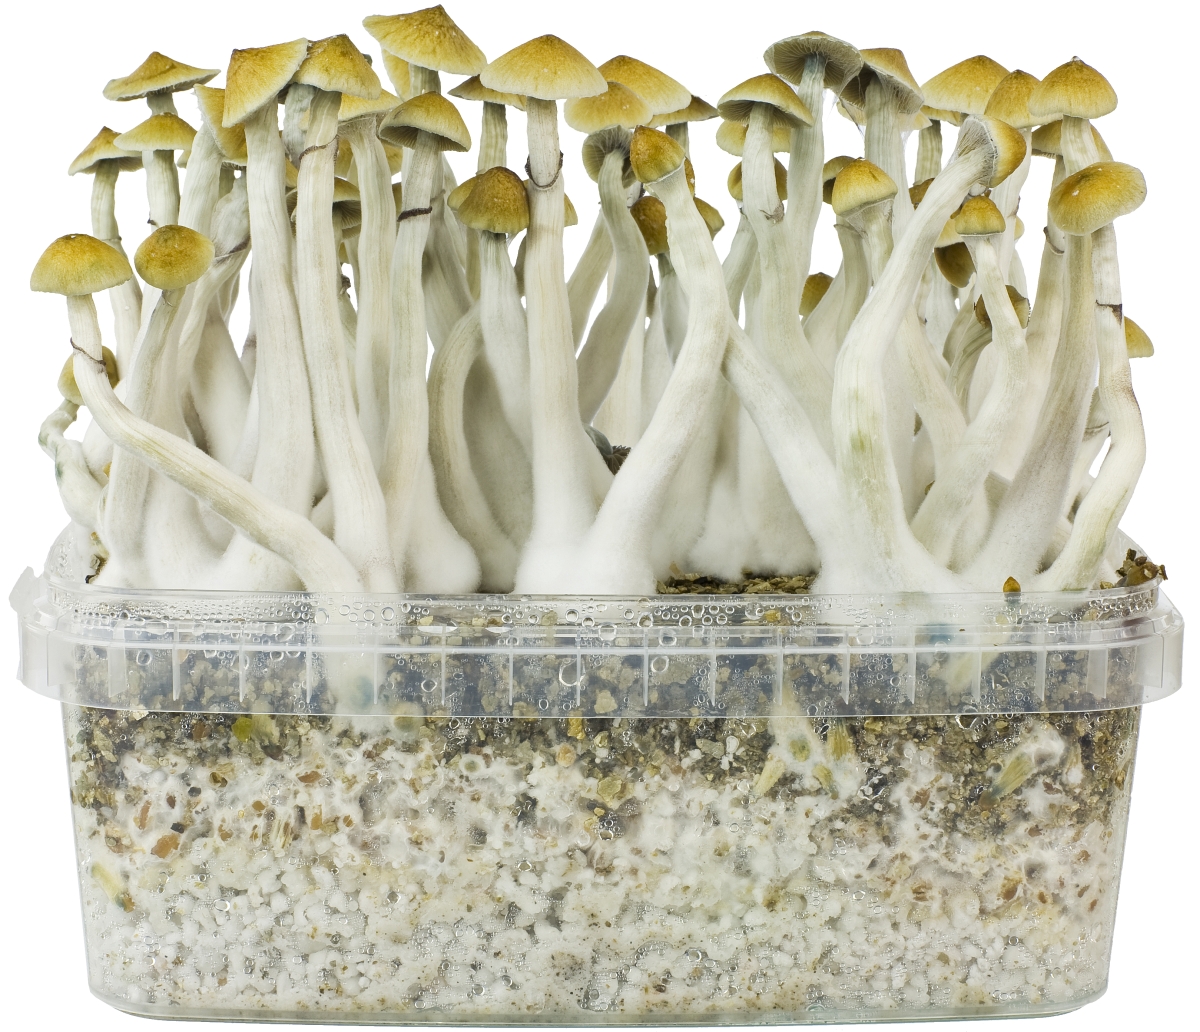 how to grow psilocybe cubensis mushrooms indoors